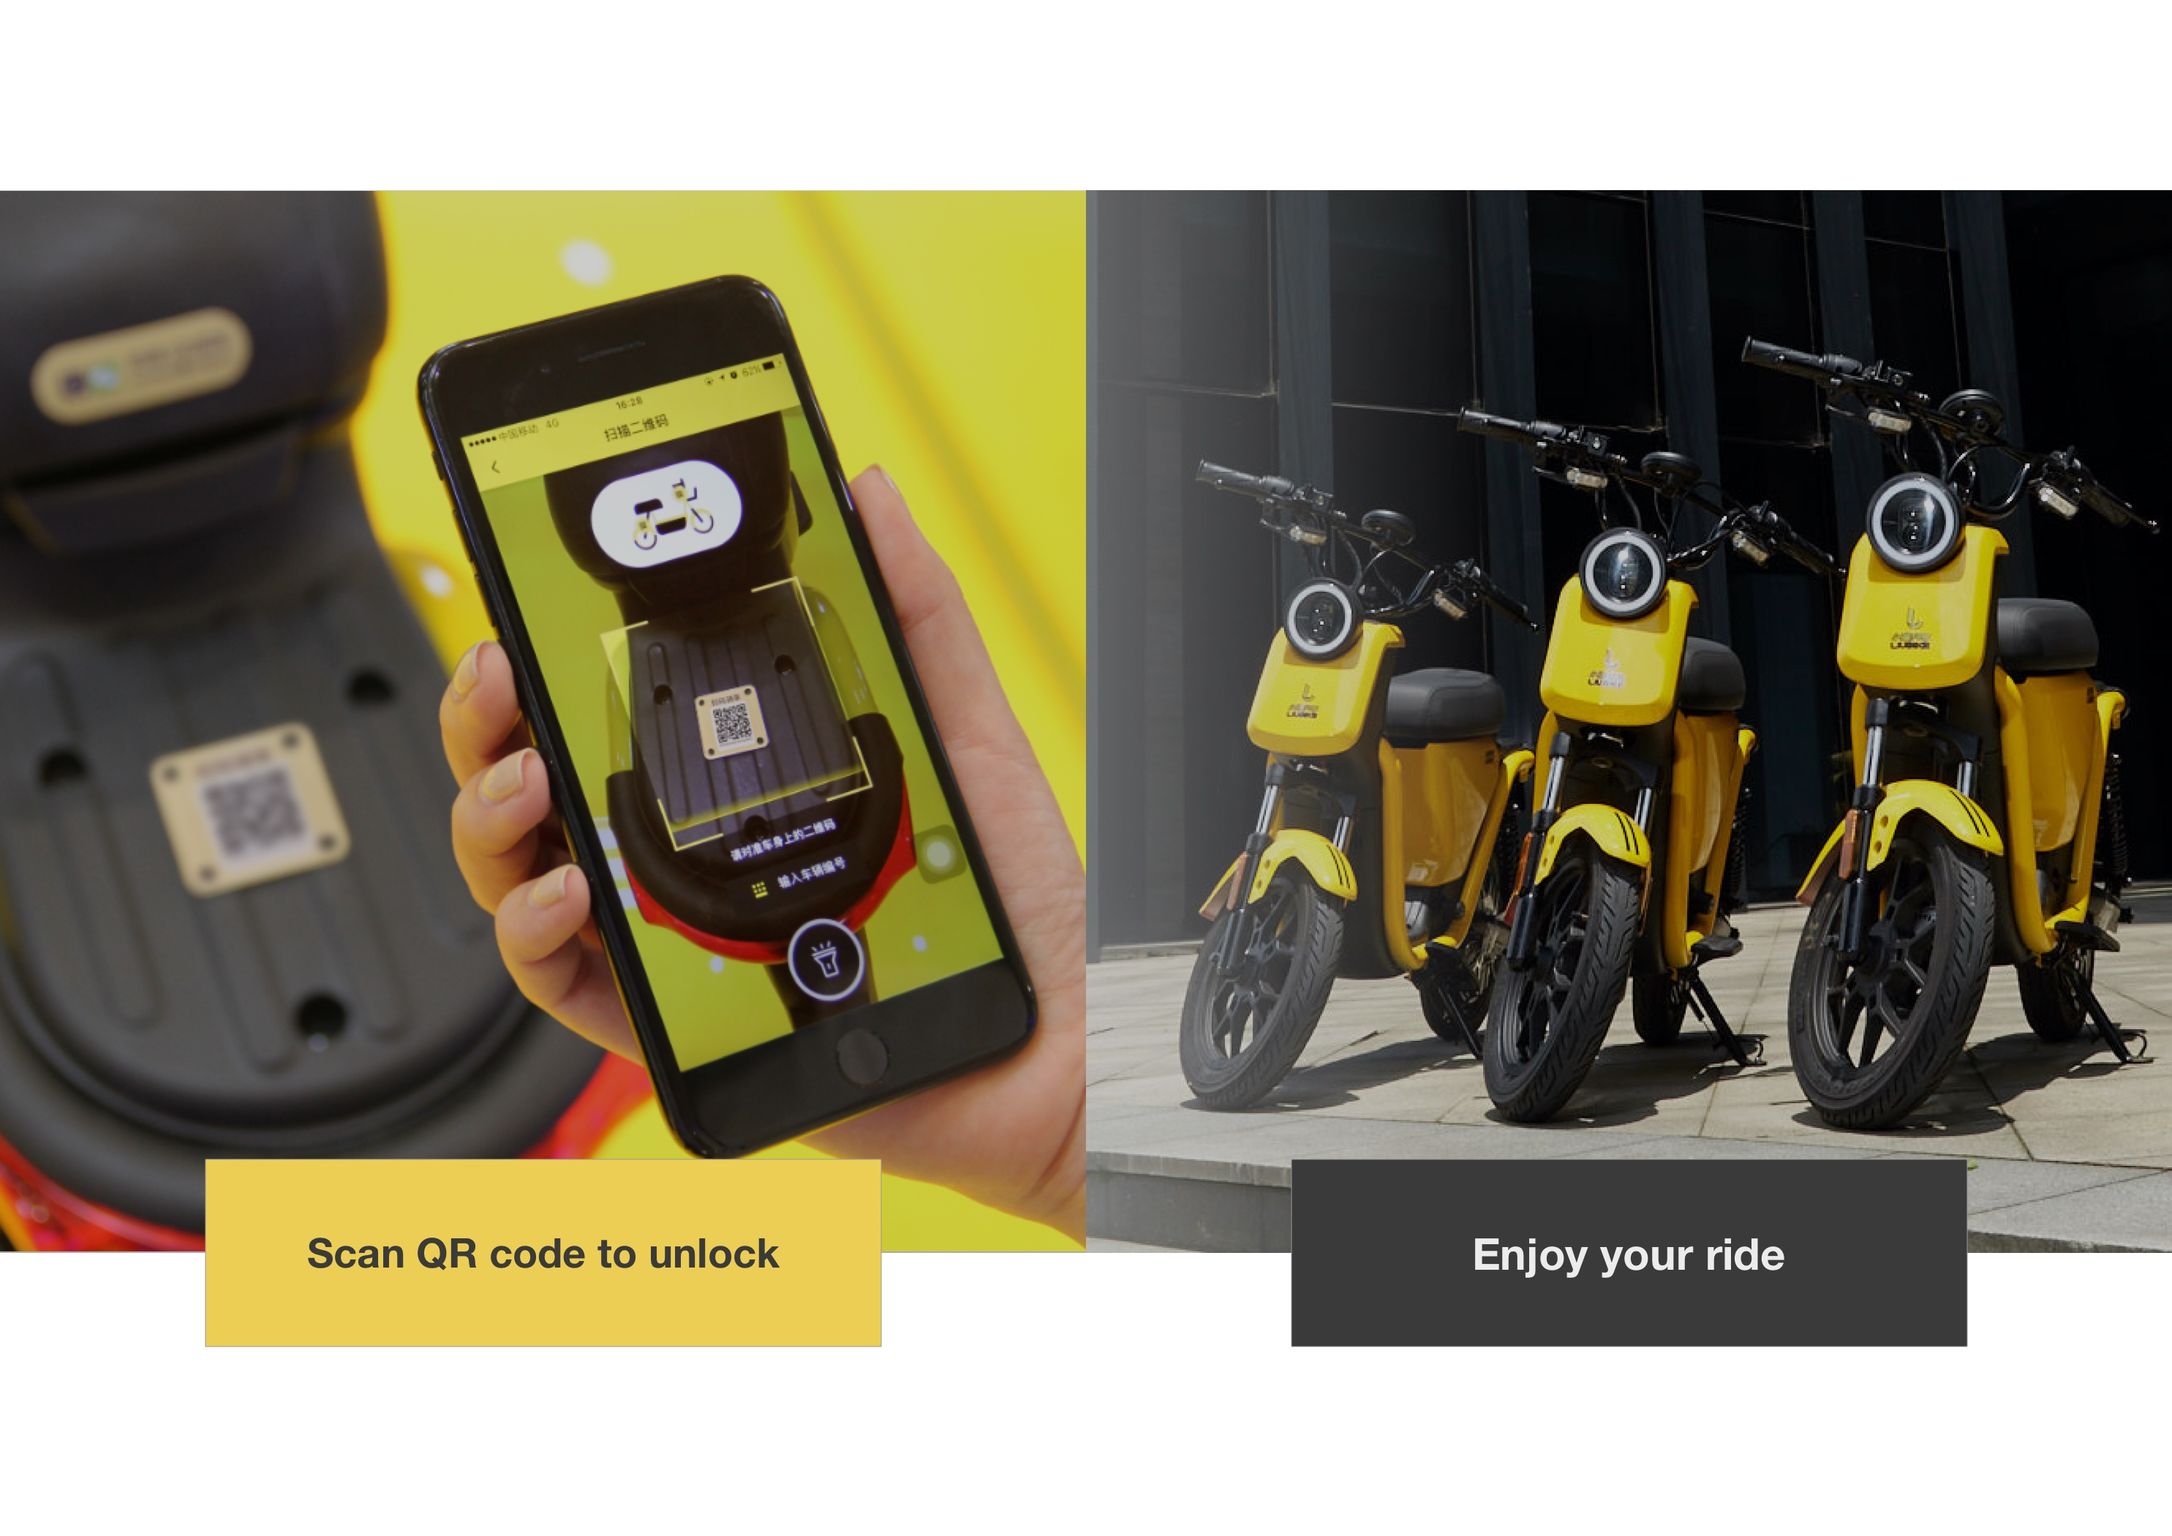 Liubike: An Innovative E-Bike Sharing Service